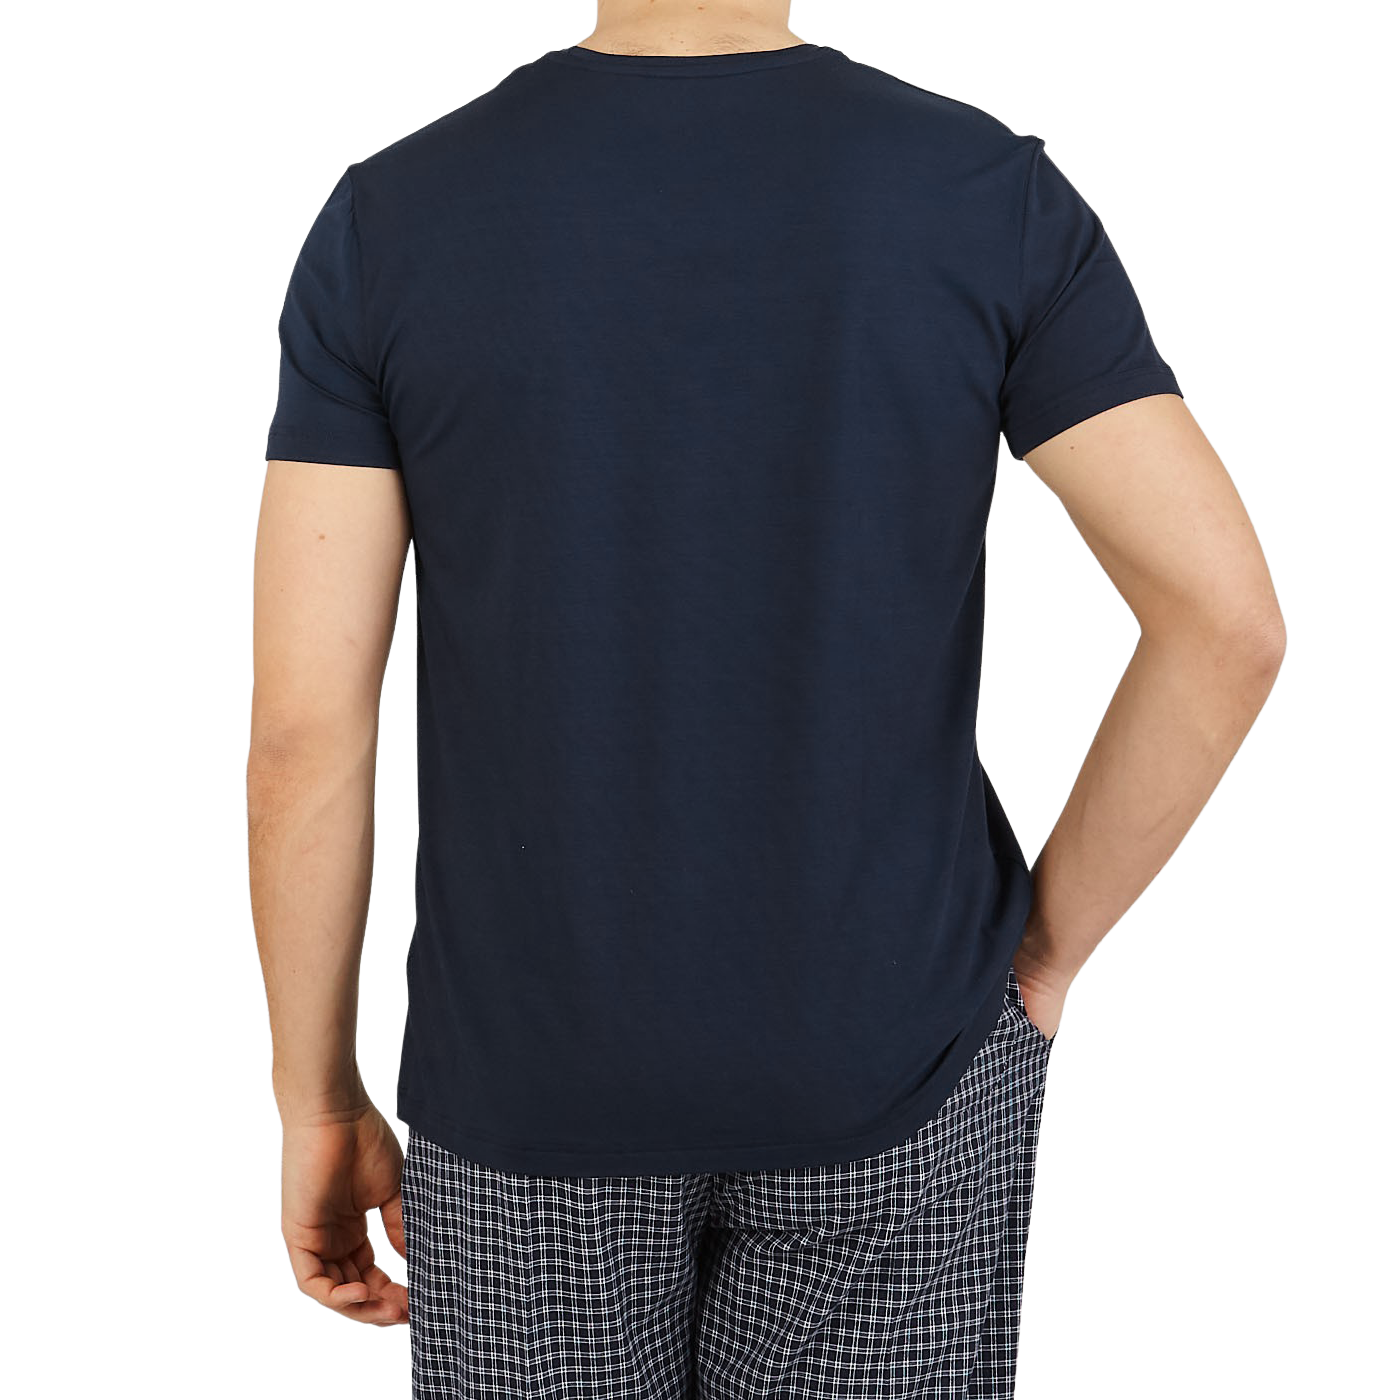 Derek Rose Navy Blue Micro Modal Stretch T-shirt Back